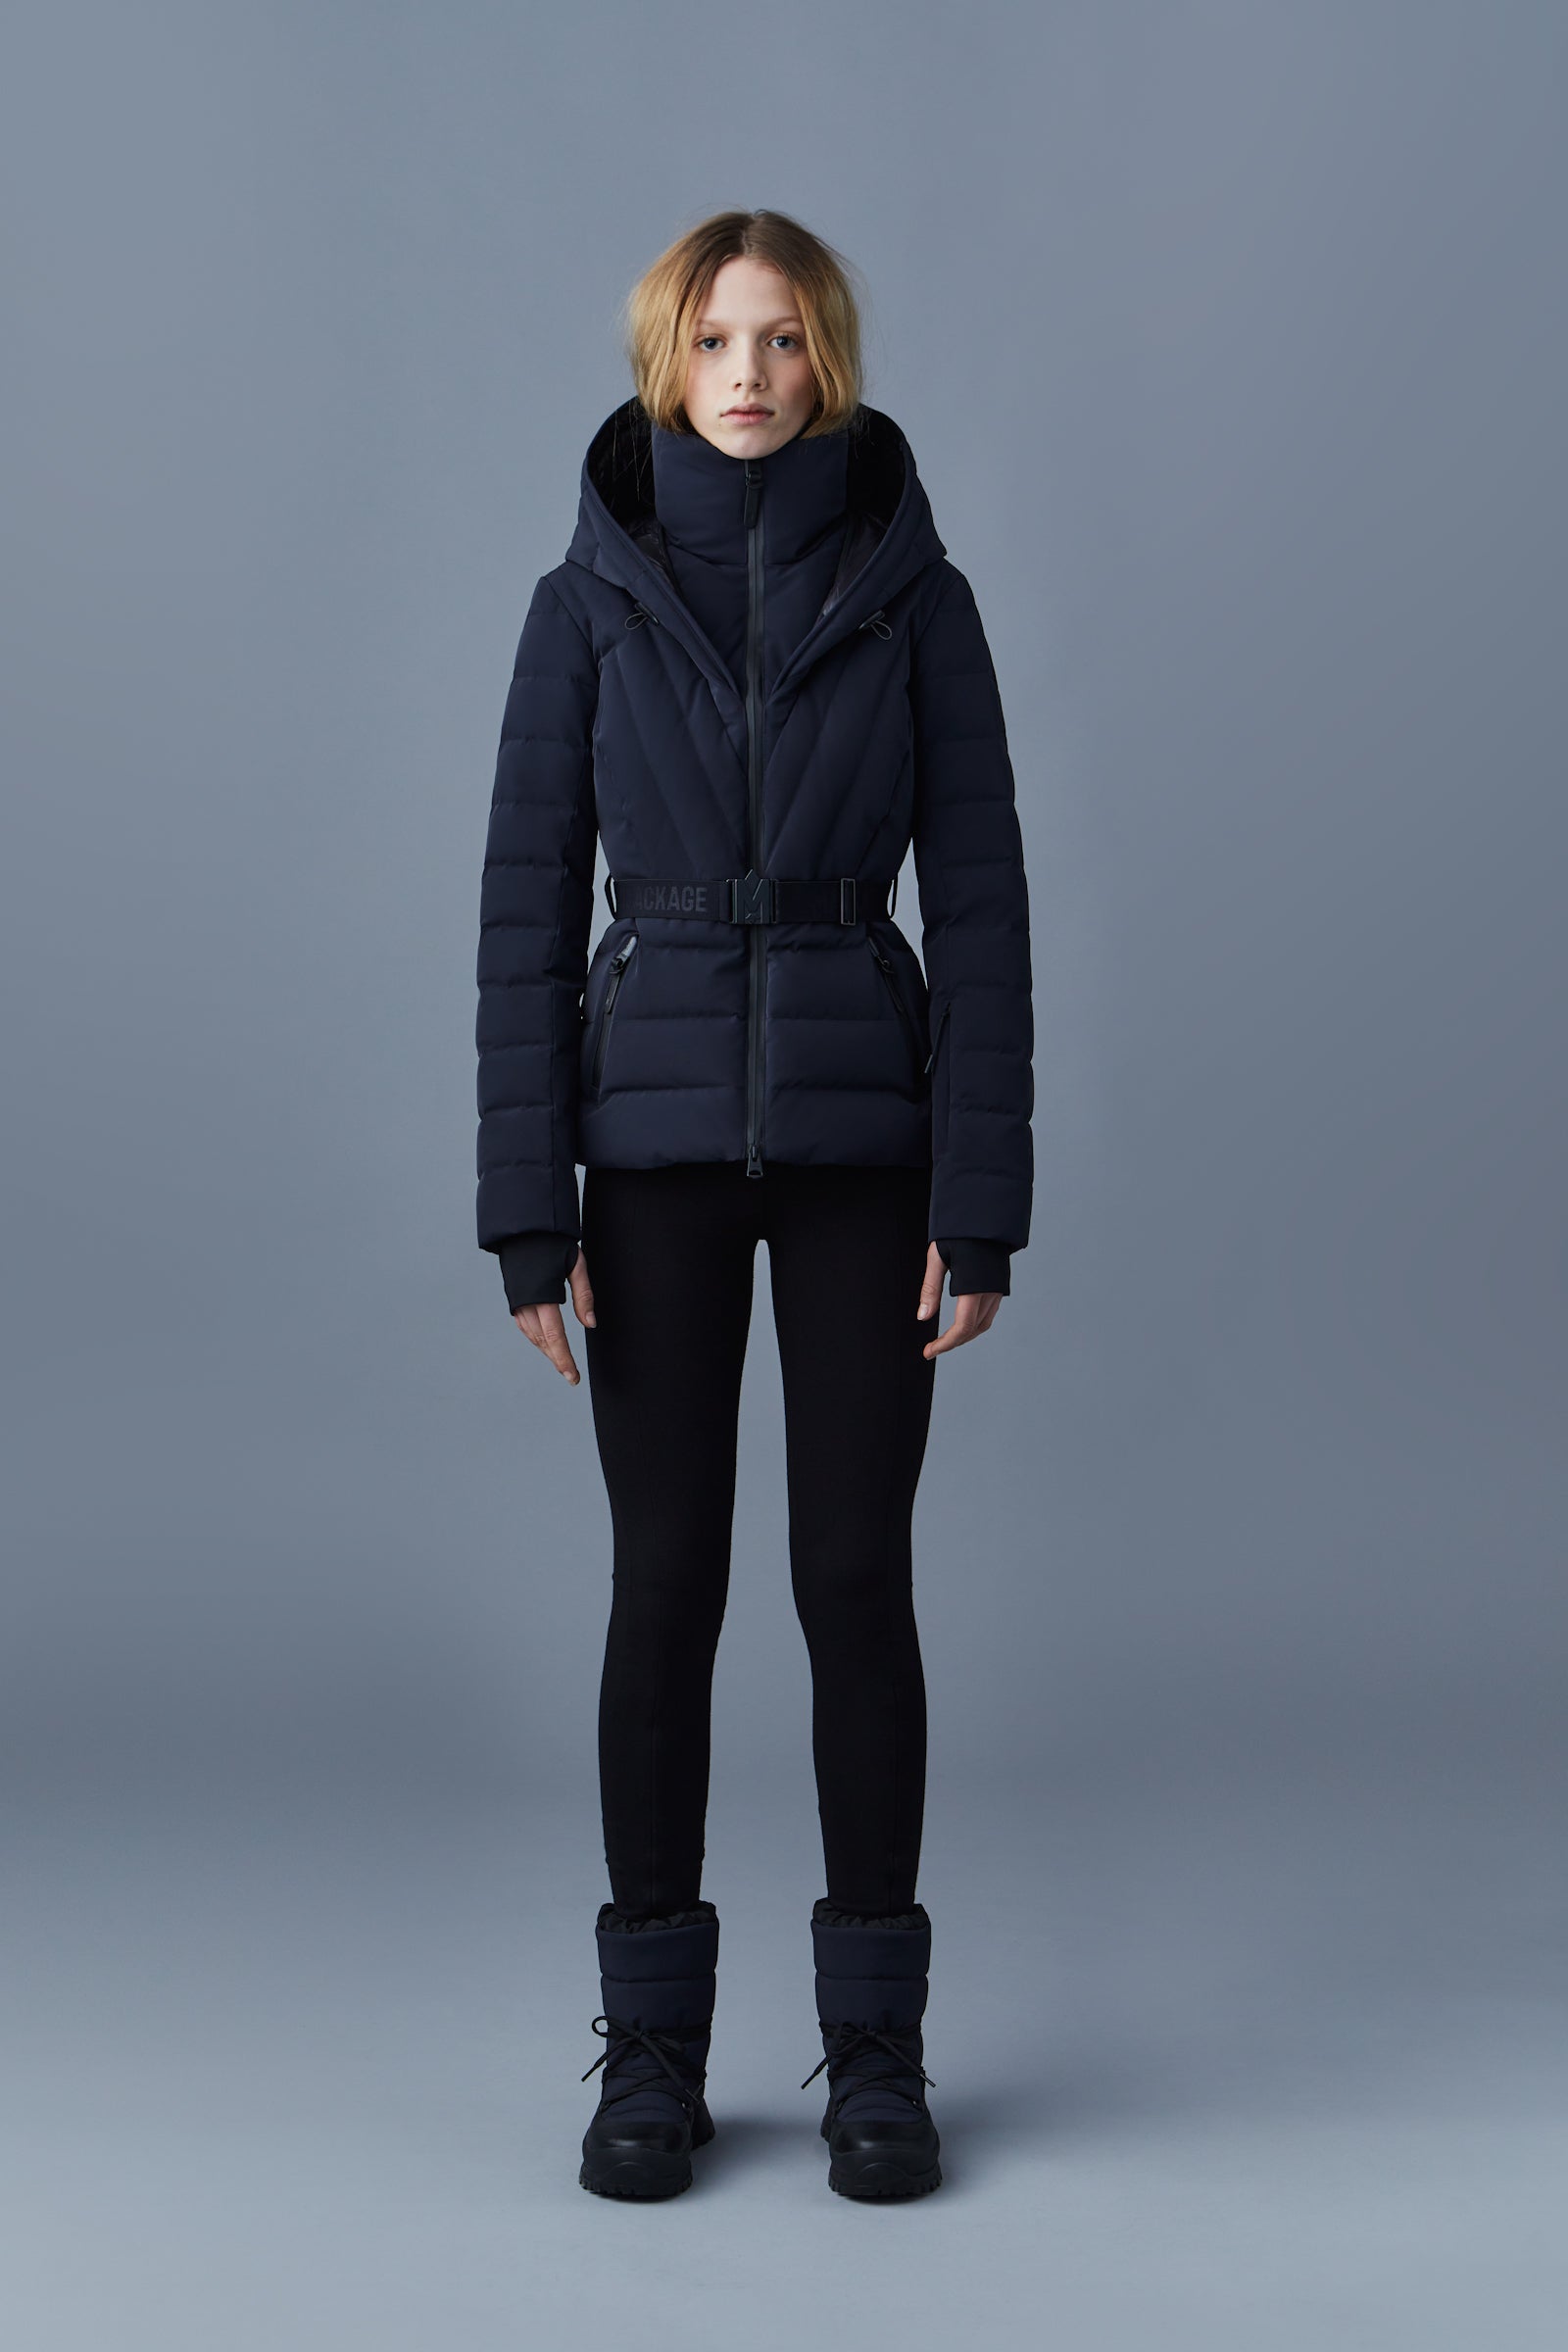 Topshop Womens Ski Snow Jacket With Fur Hood Size UK8 EUR36 US4